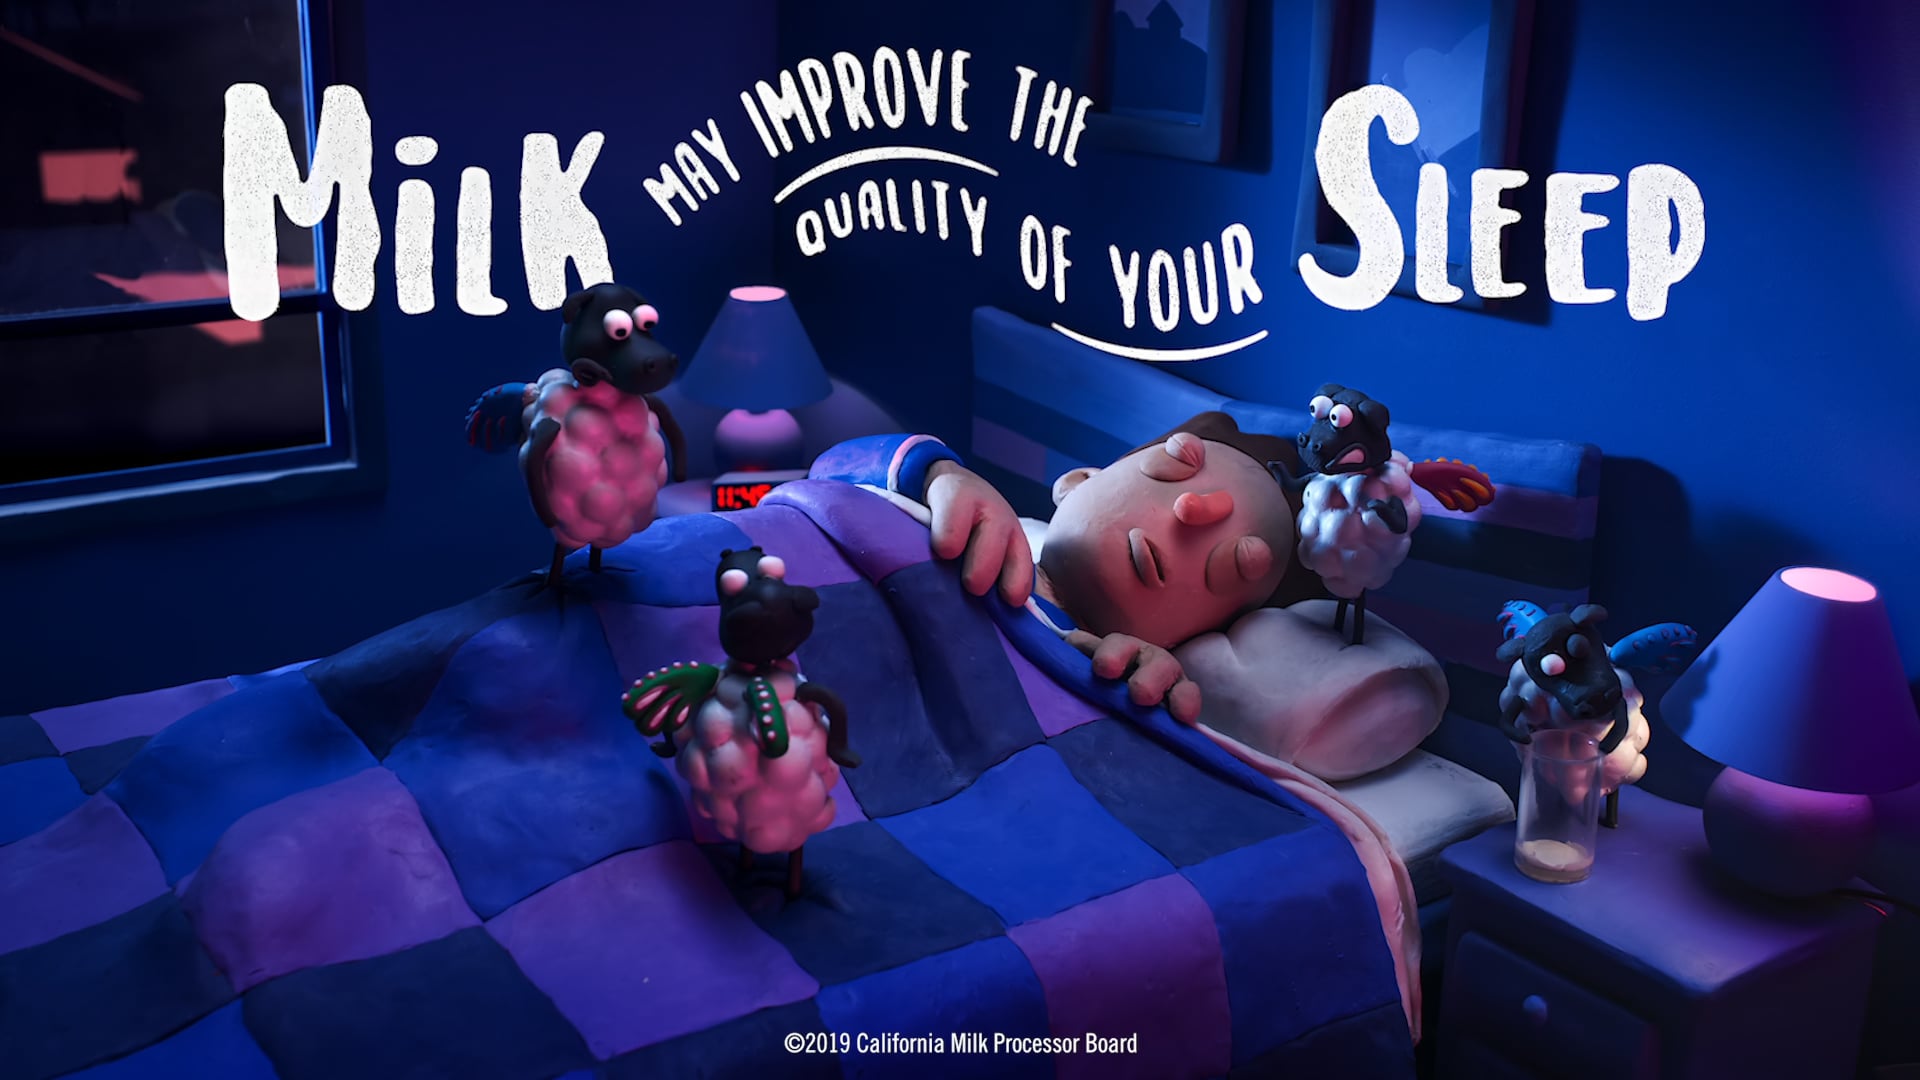 GOT MILK_ Milk may improve the quality of your sleep